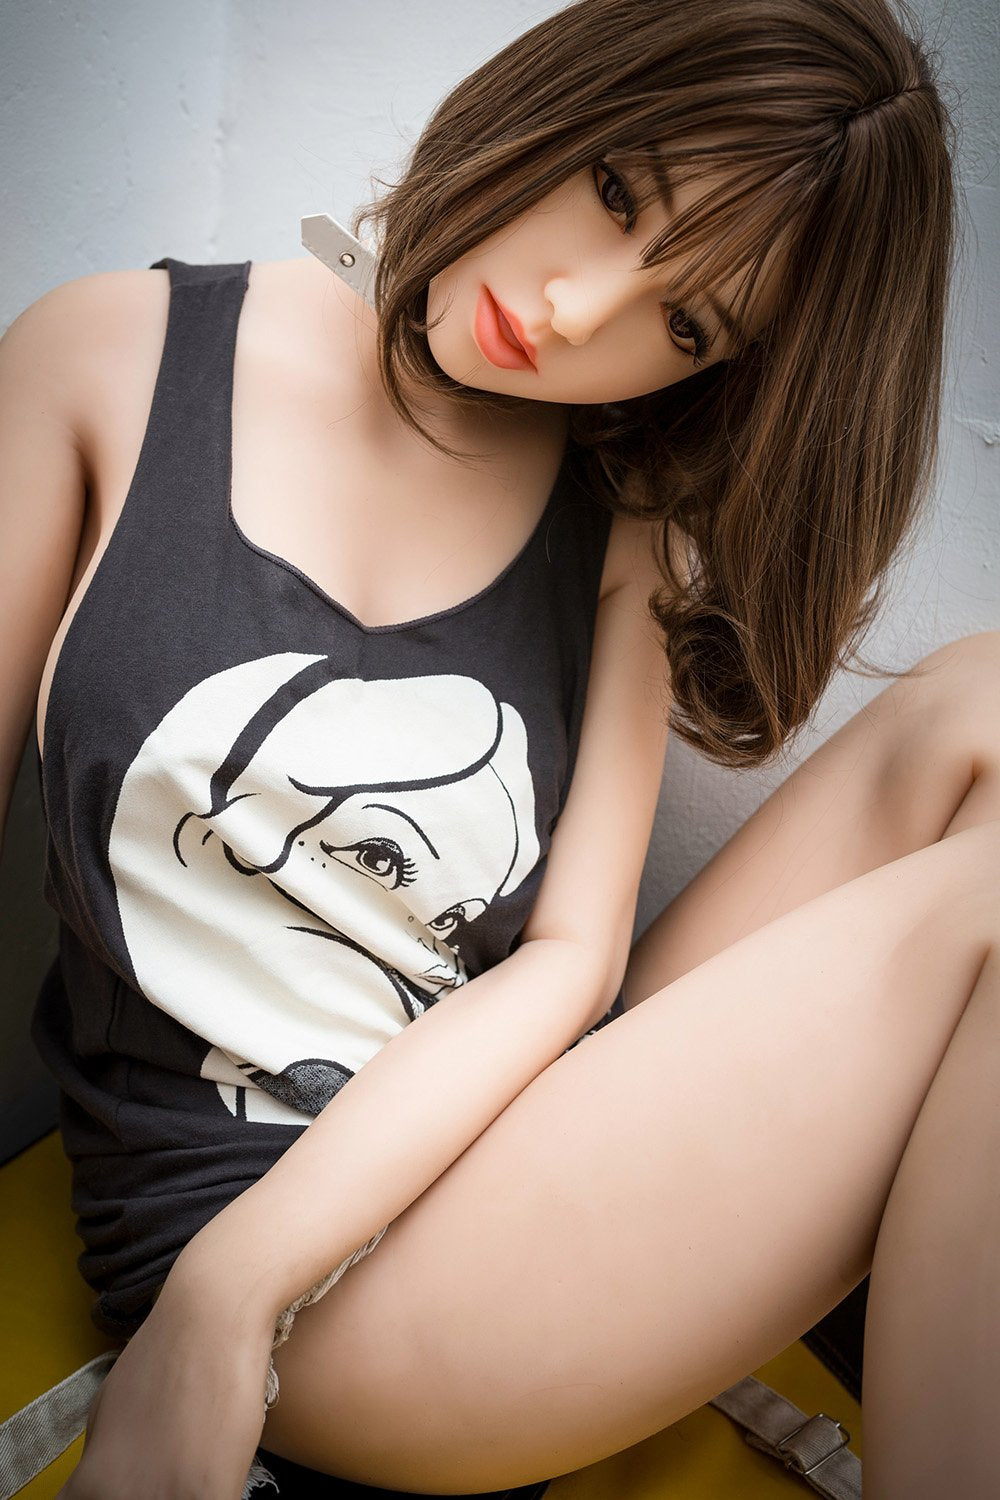 elle 168cm brown hair japanese big boobs athletic skinny tpe wm asian sex doll(11)